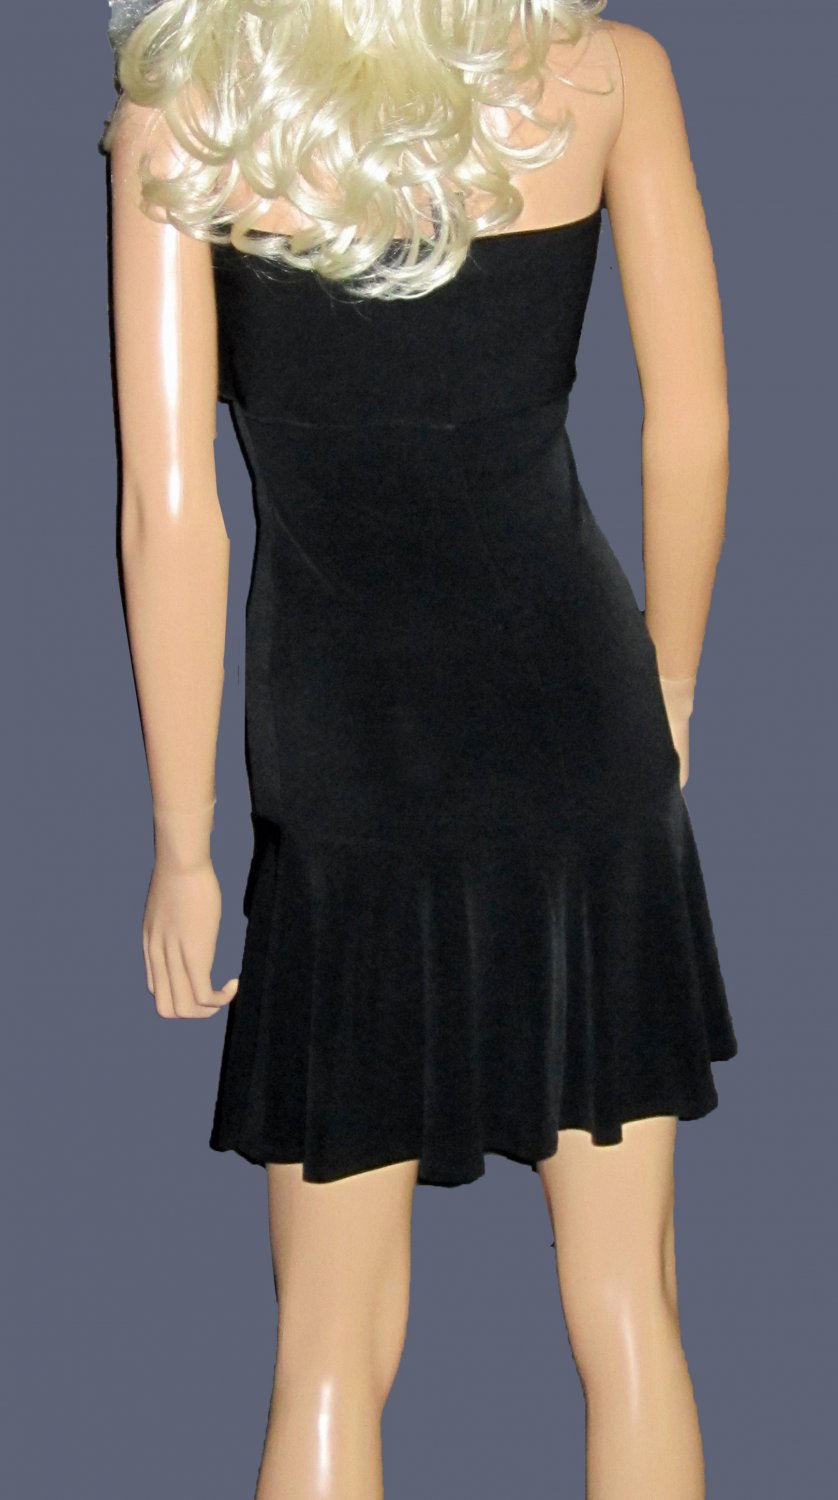 Victoria S Secret Black Strapless Flirty Evening Dress Xxs 197228